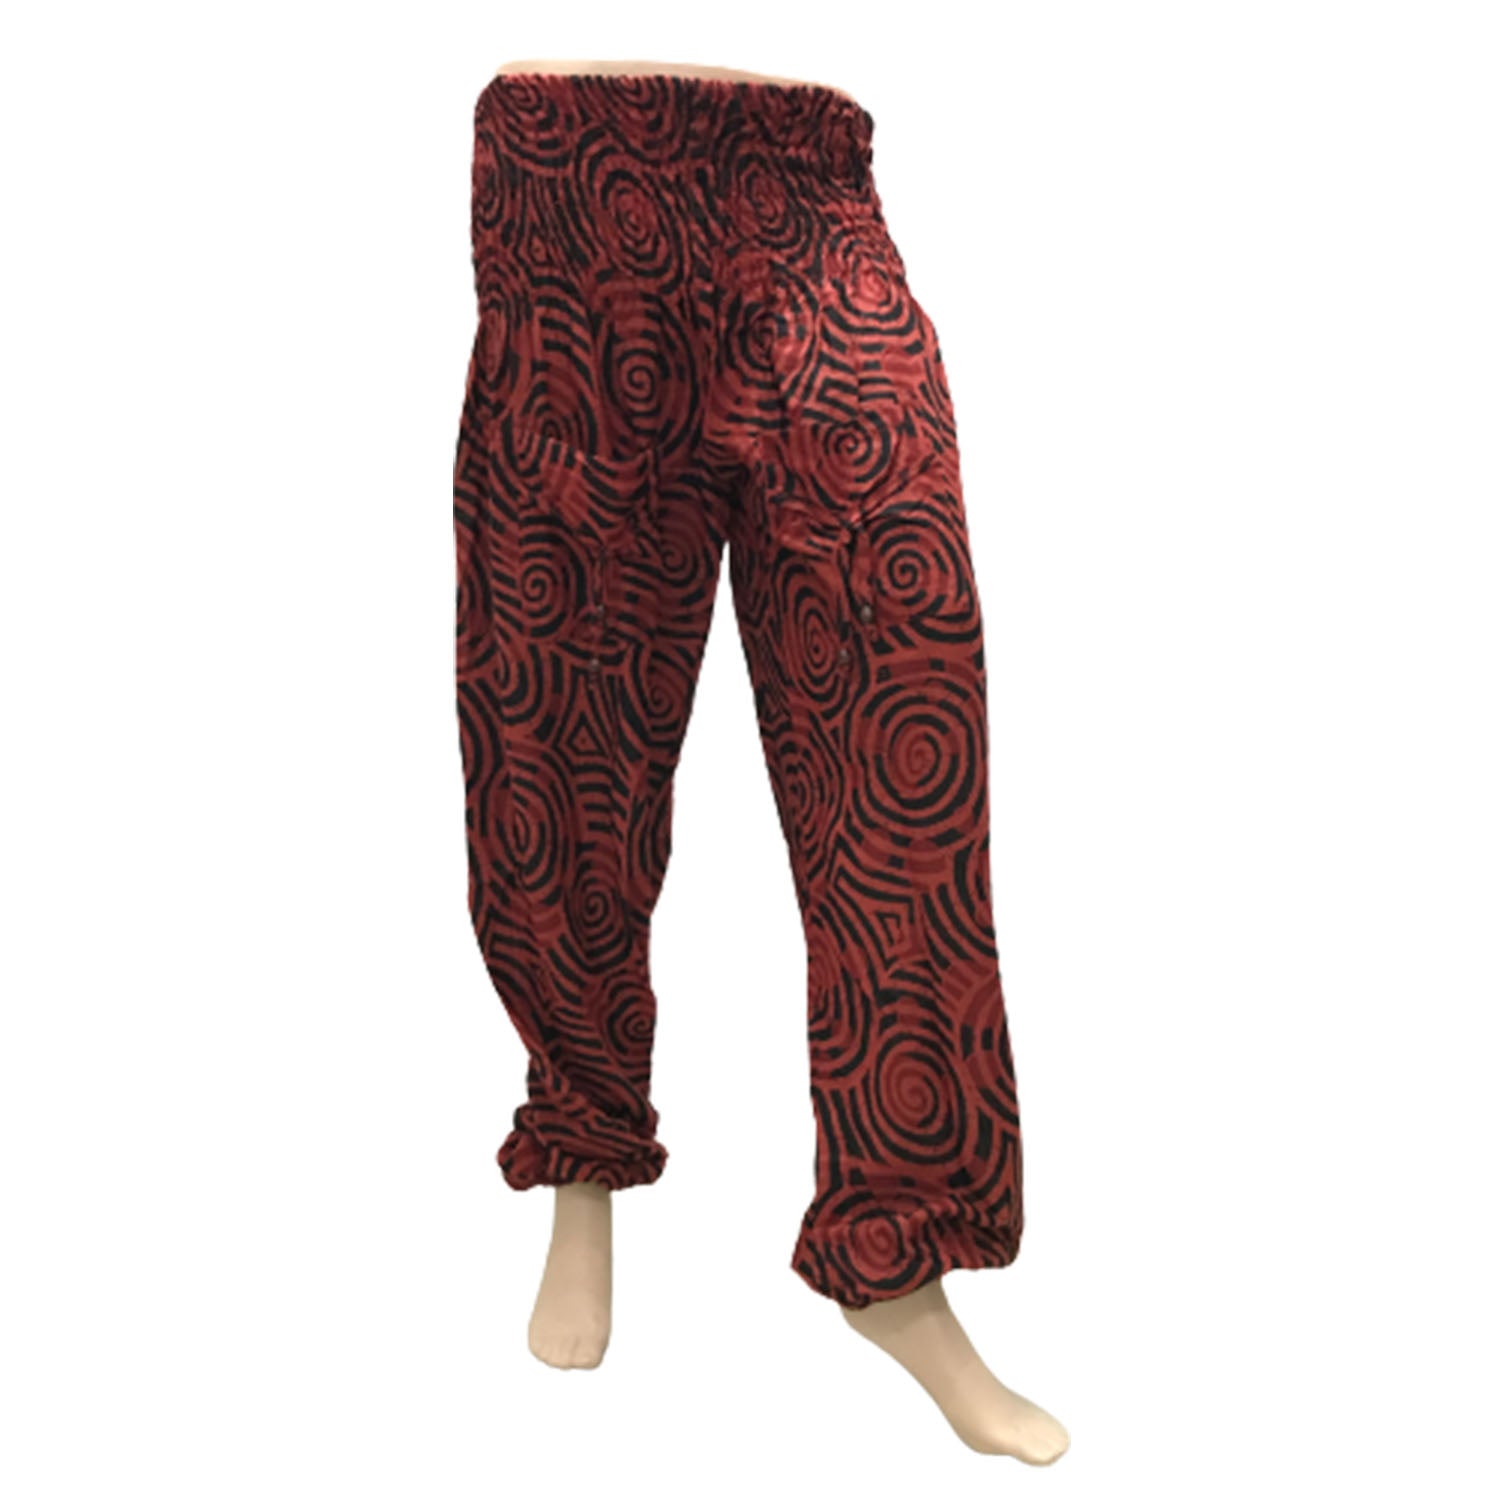 Ganesha Handicrafts Cuffed Casual Trousers, Casual Trousers, Cuffed Trousers, Red & Black Trouser